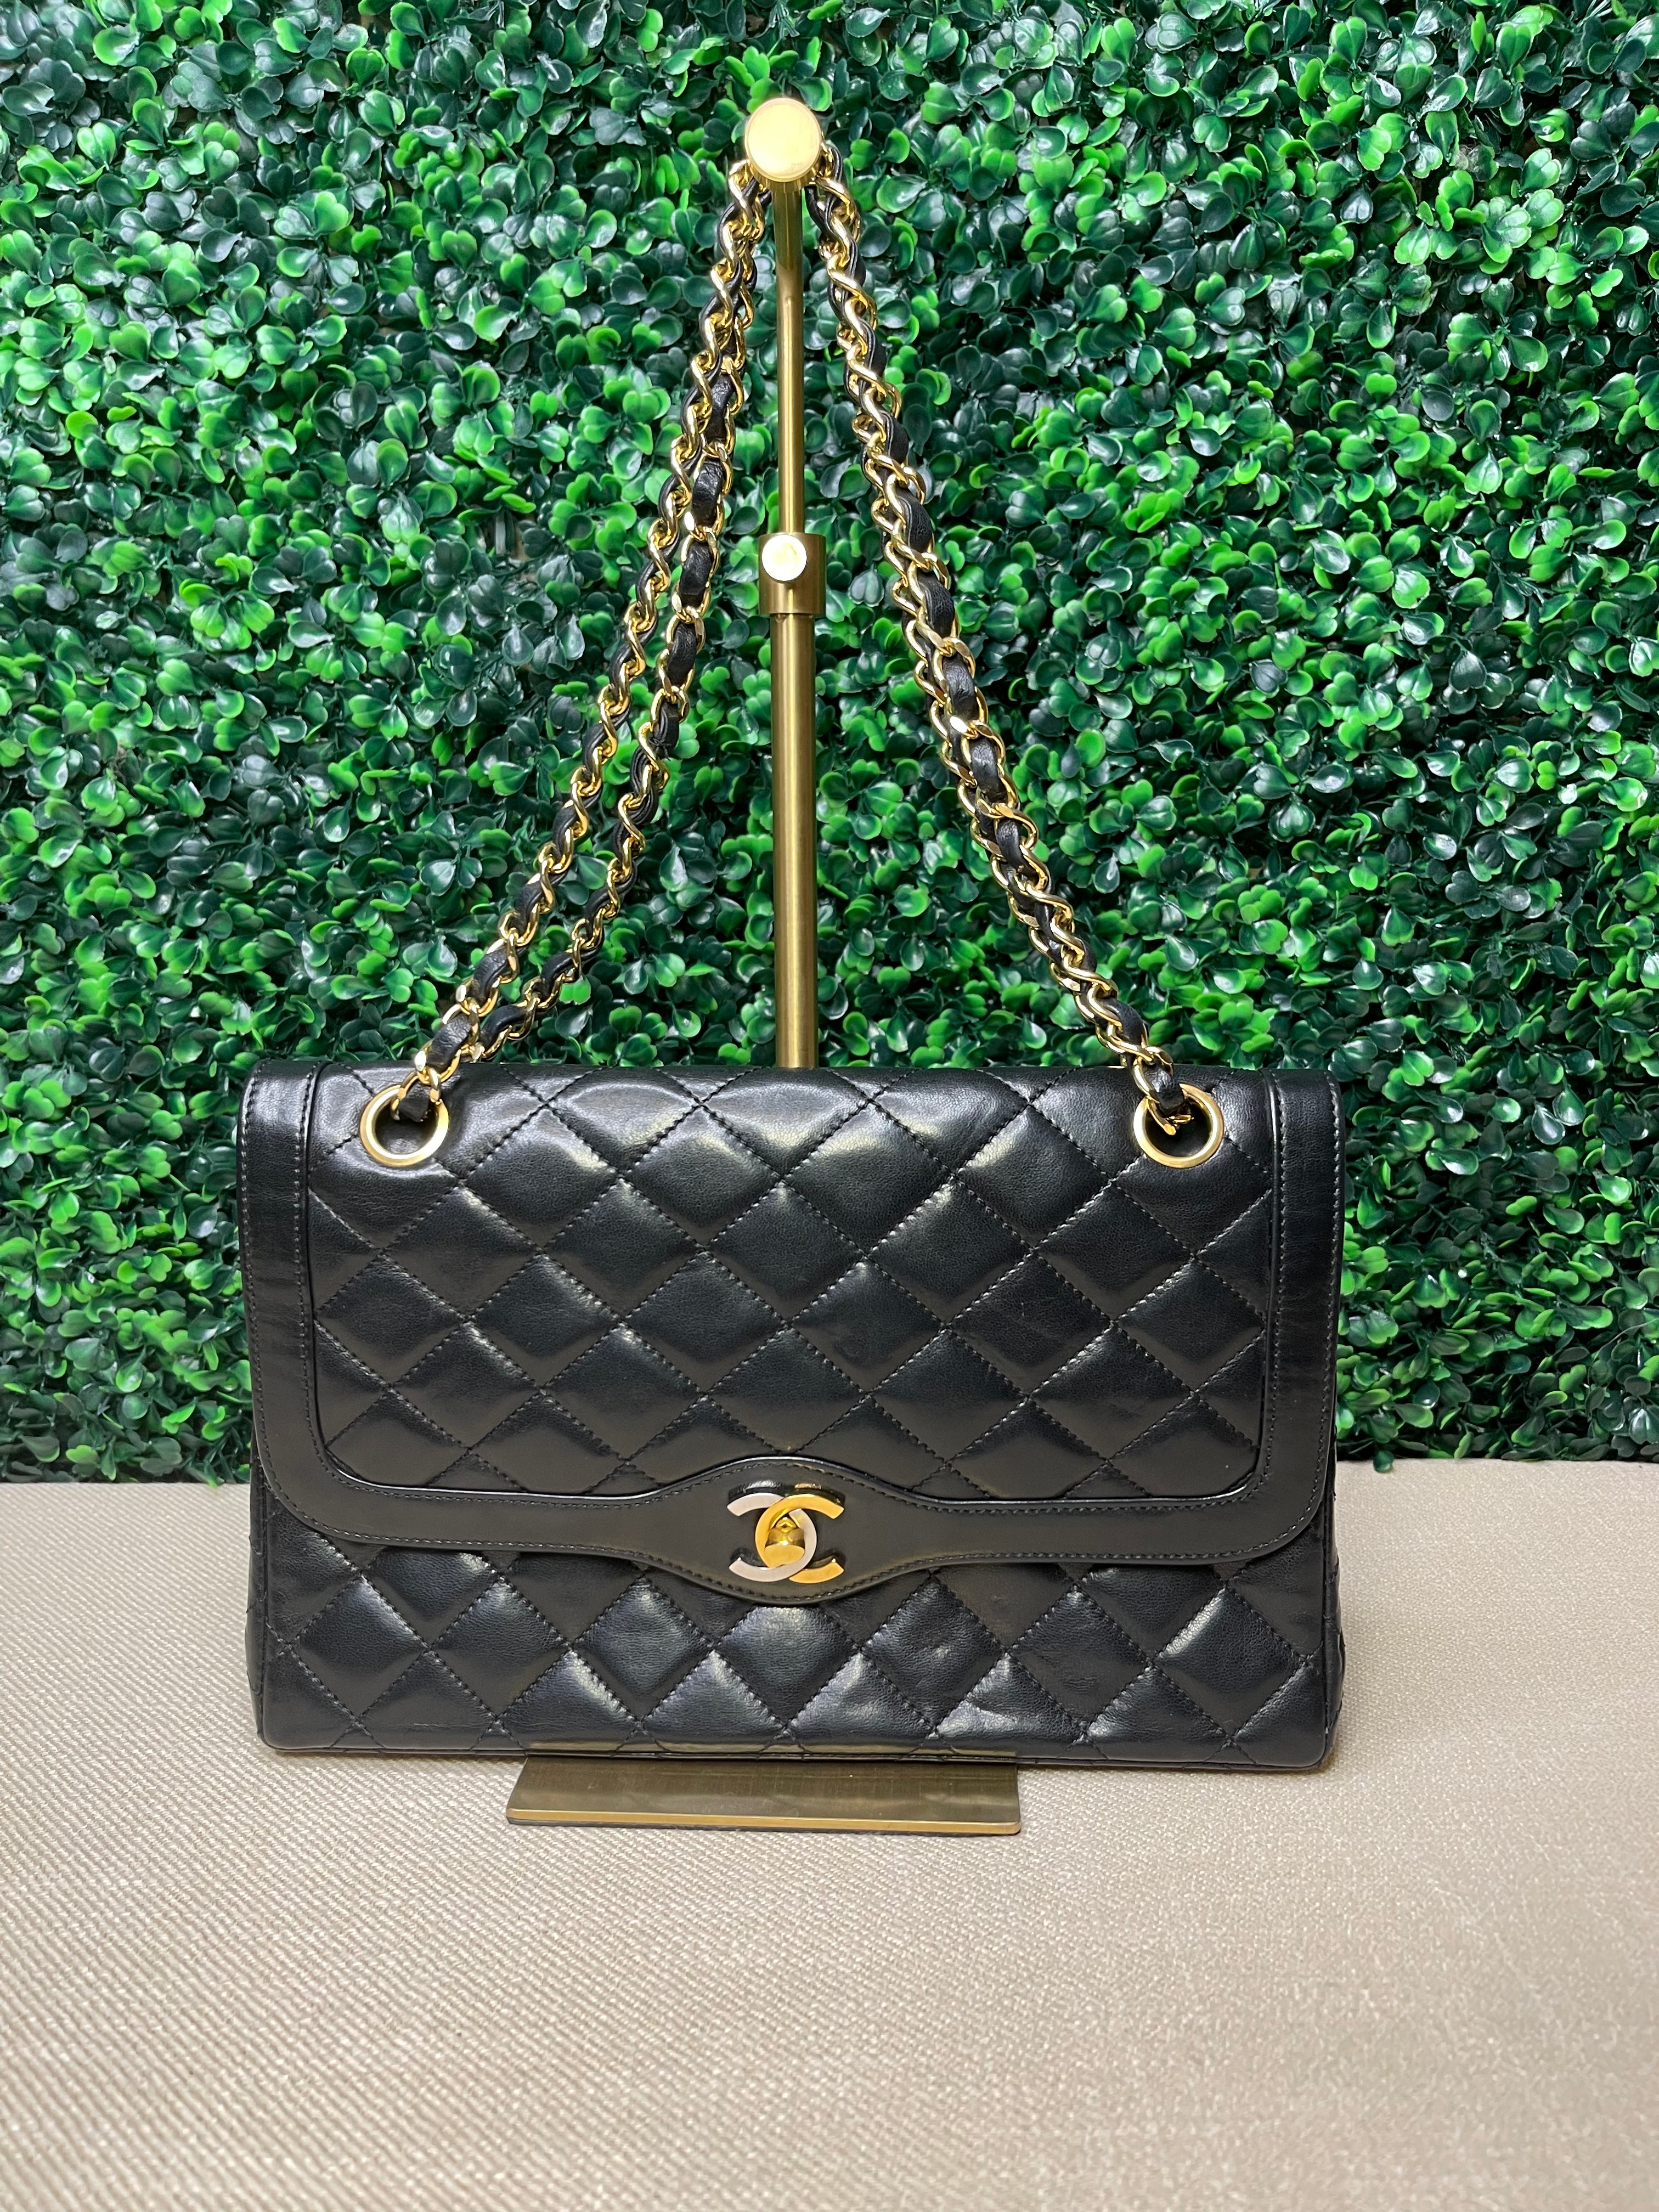 Chanel Patent Reissue 225 Double Flap Bag